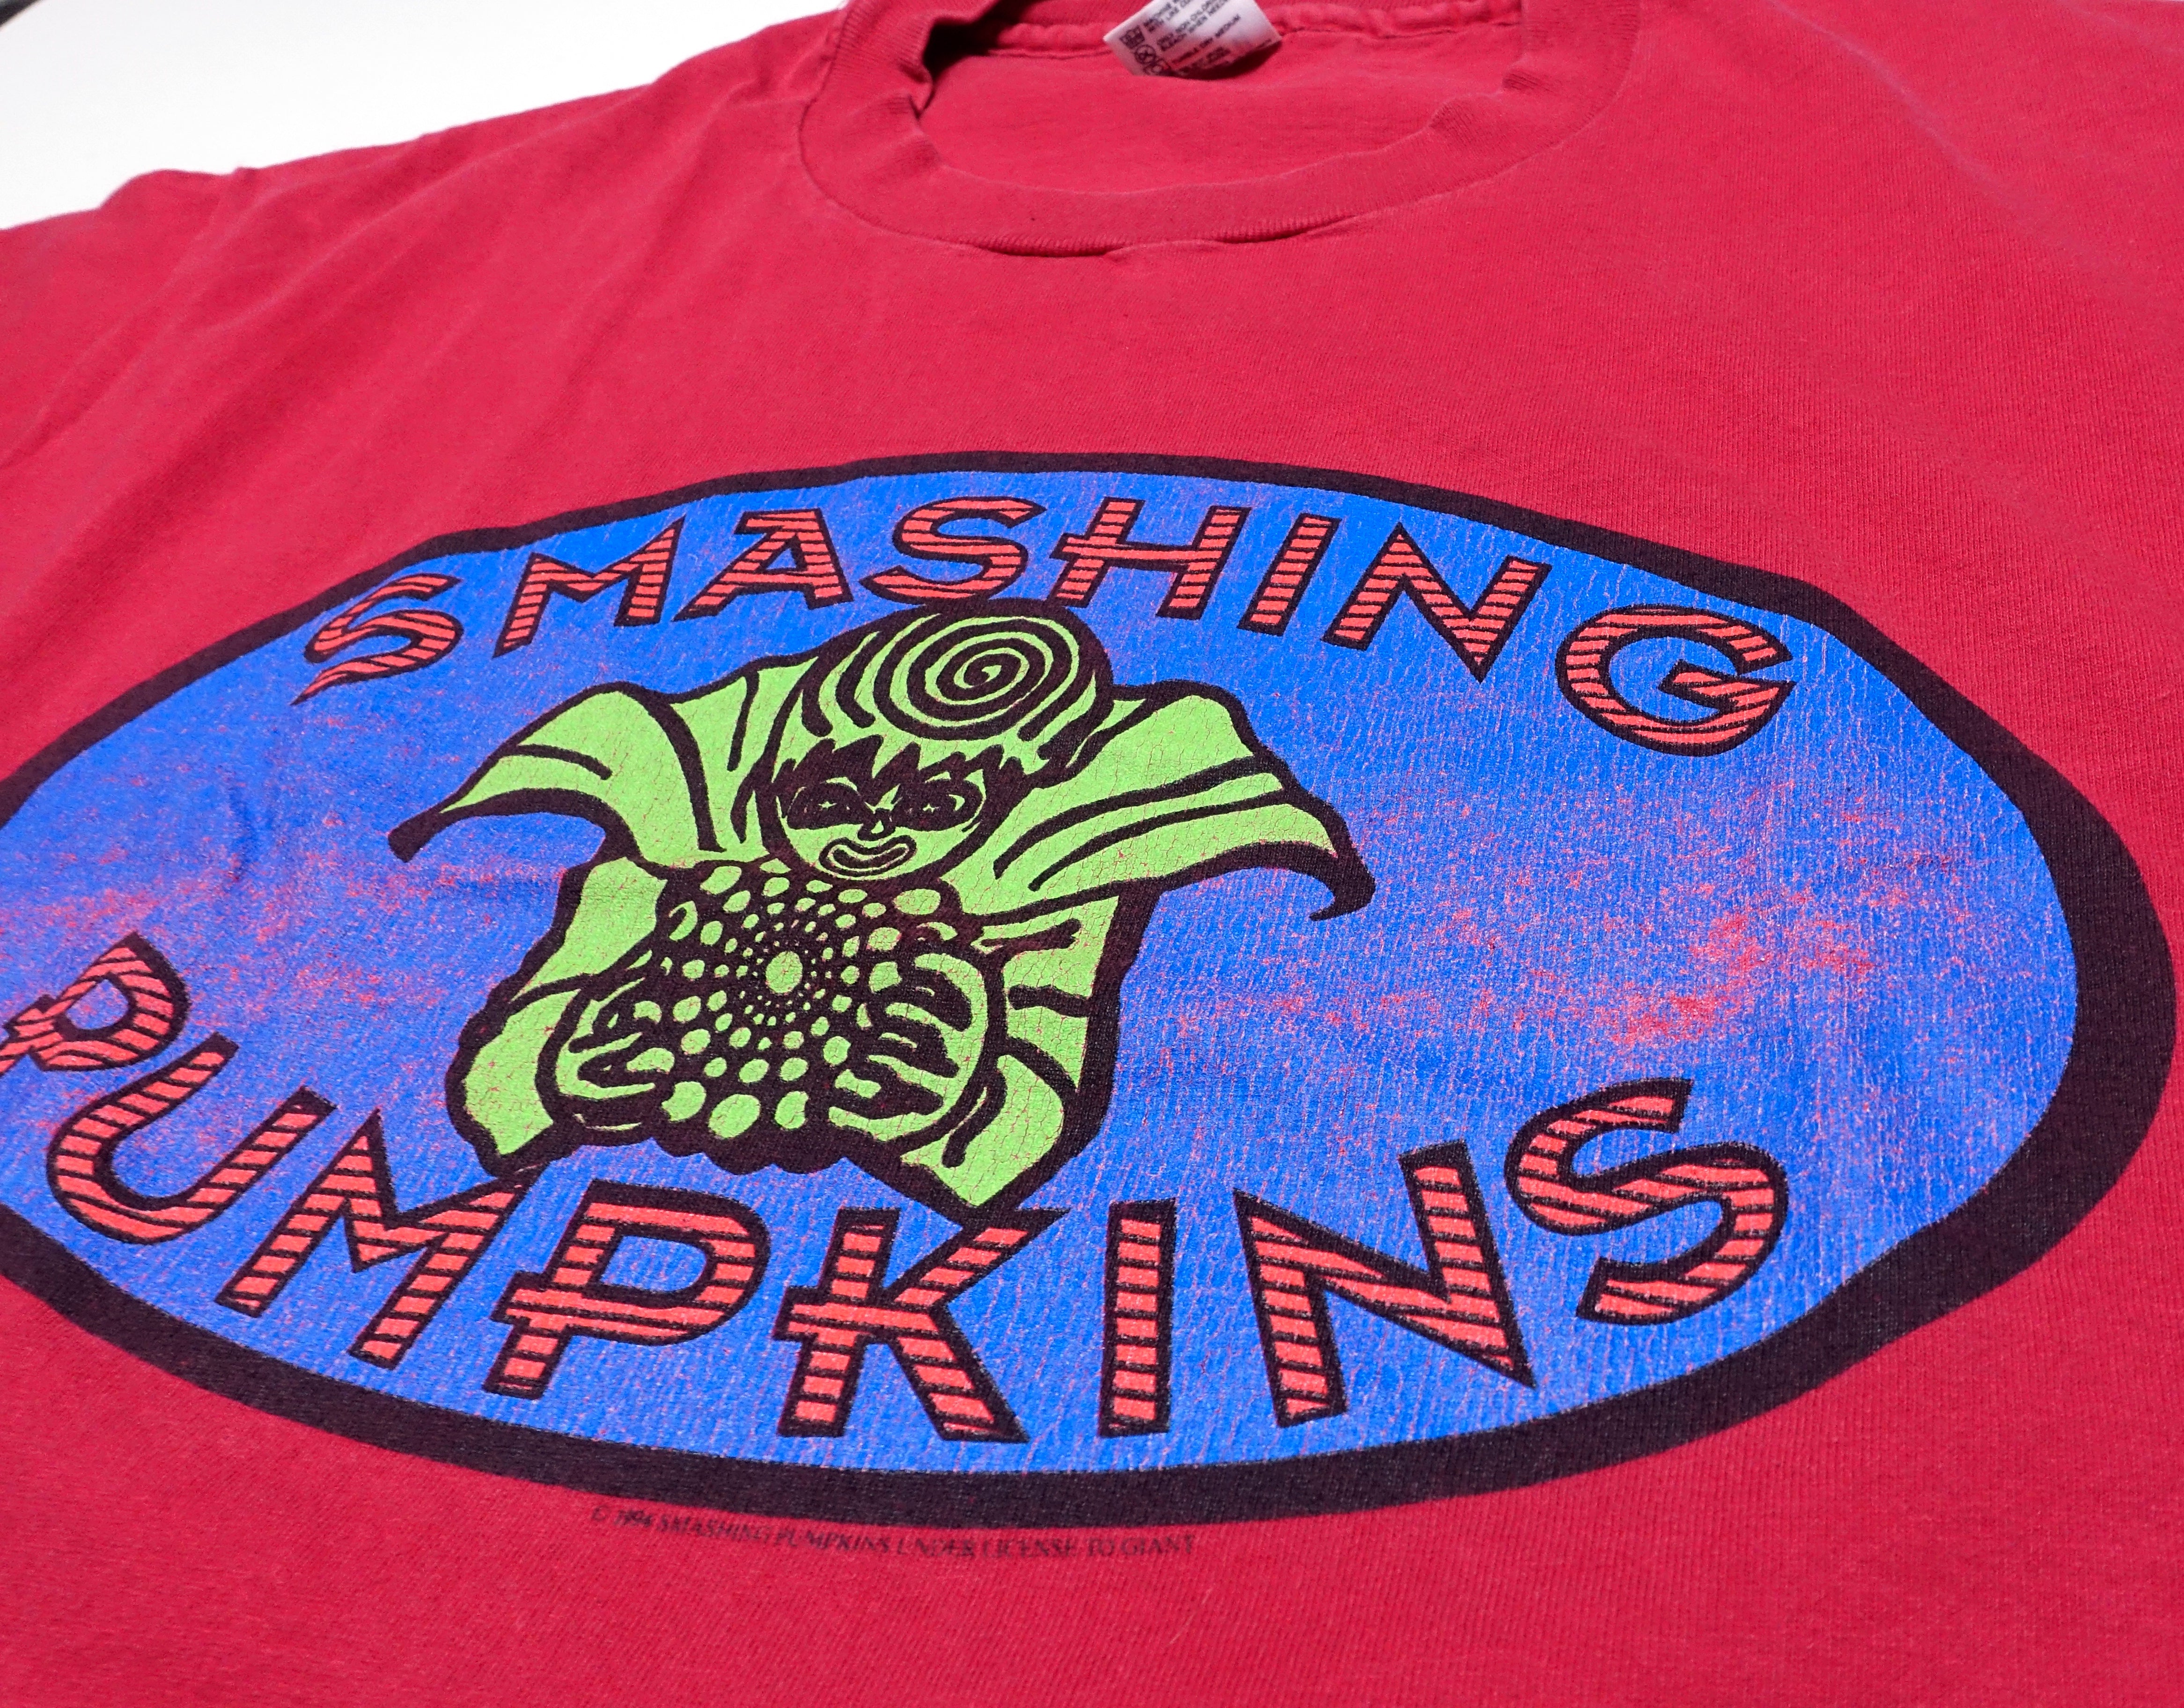 Smashing Pumpkins - Oval 1994 Tour Shirt Size XL